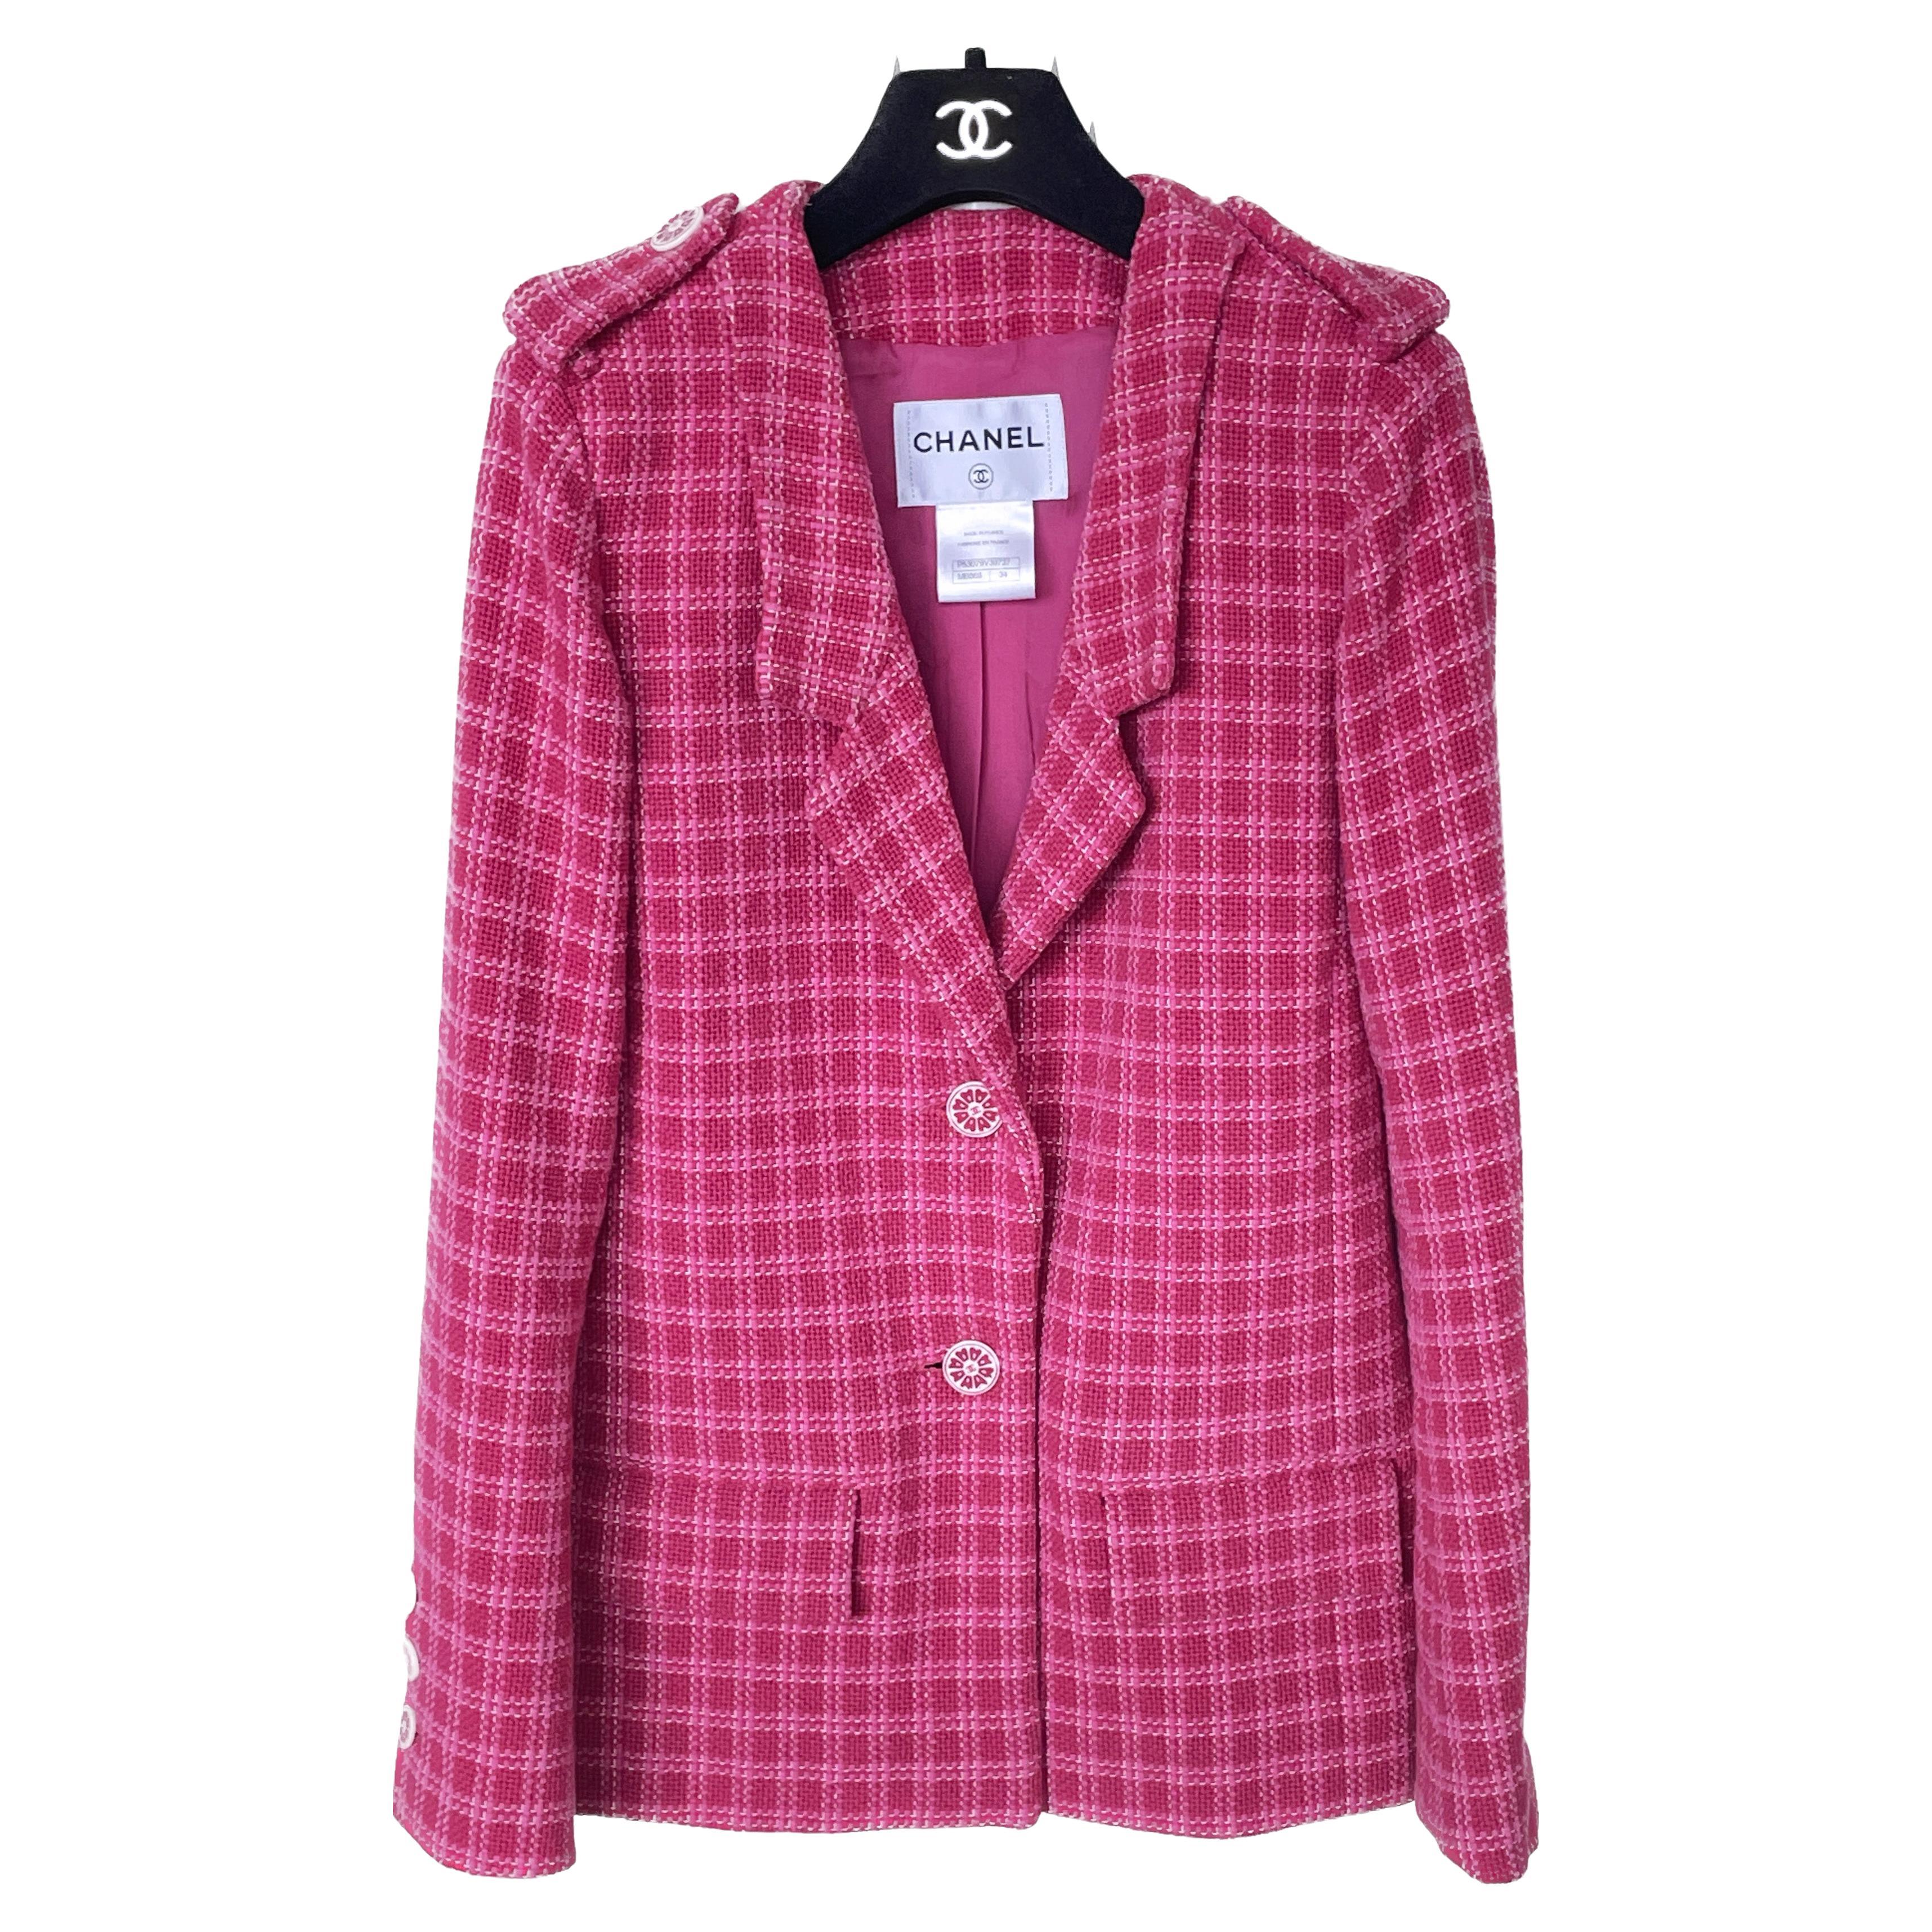 Chanel New Seoul Collection Tweed Jacket